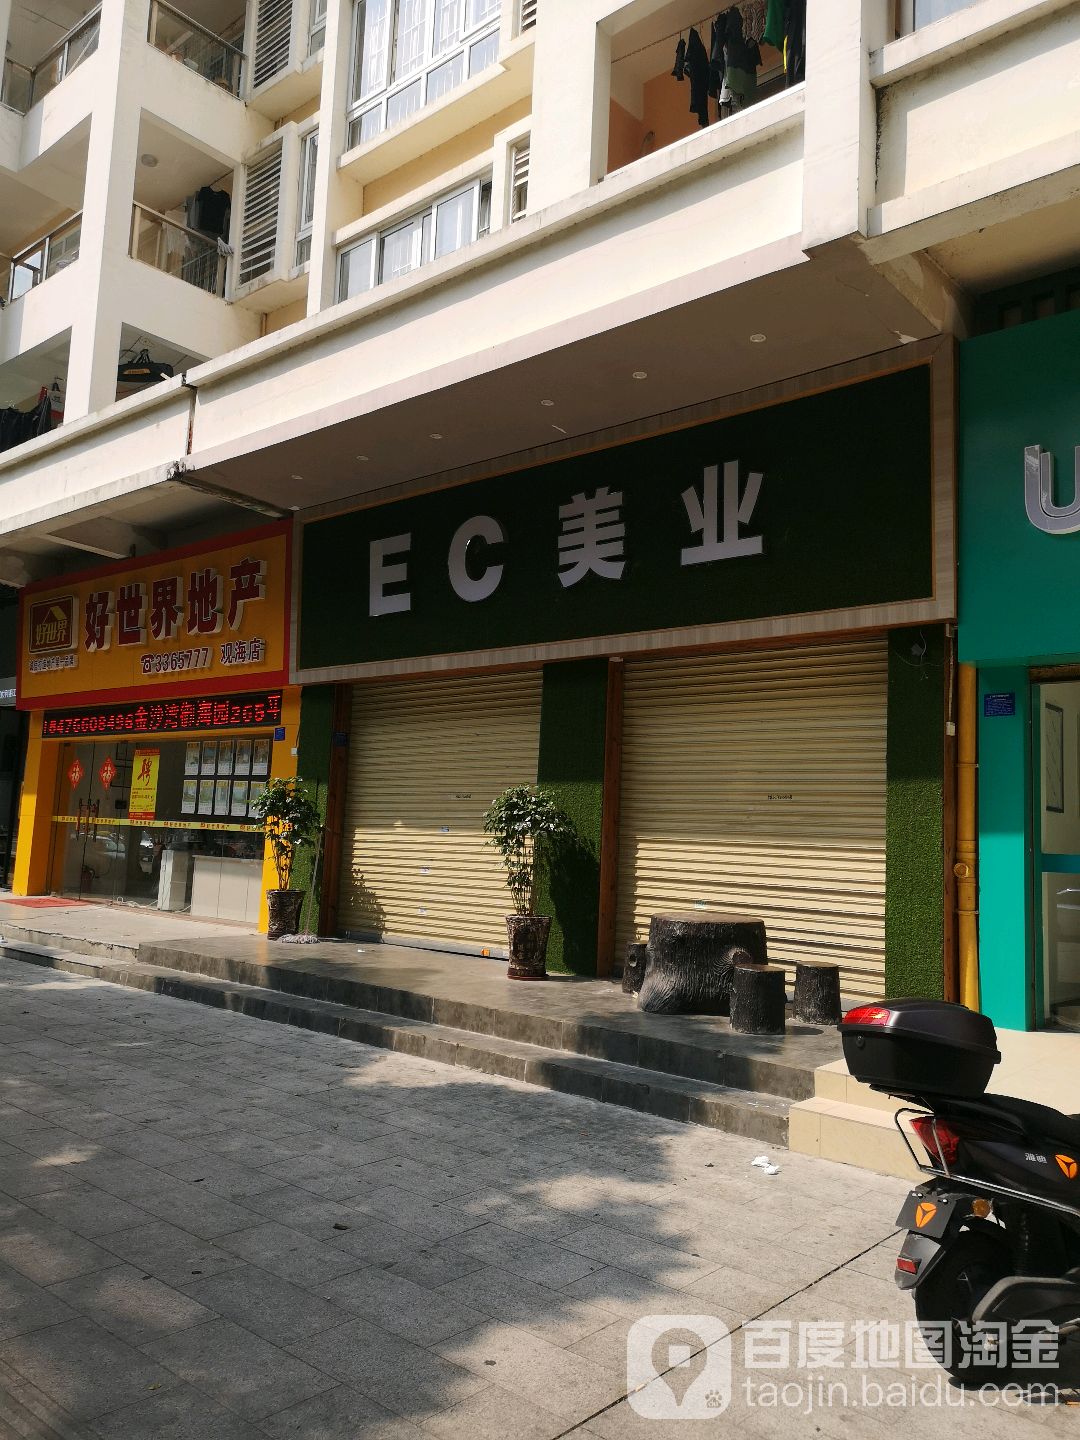 EC美业(海祥路店)